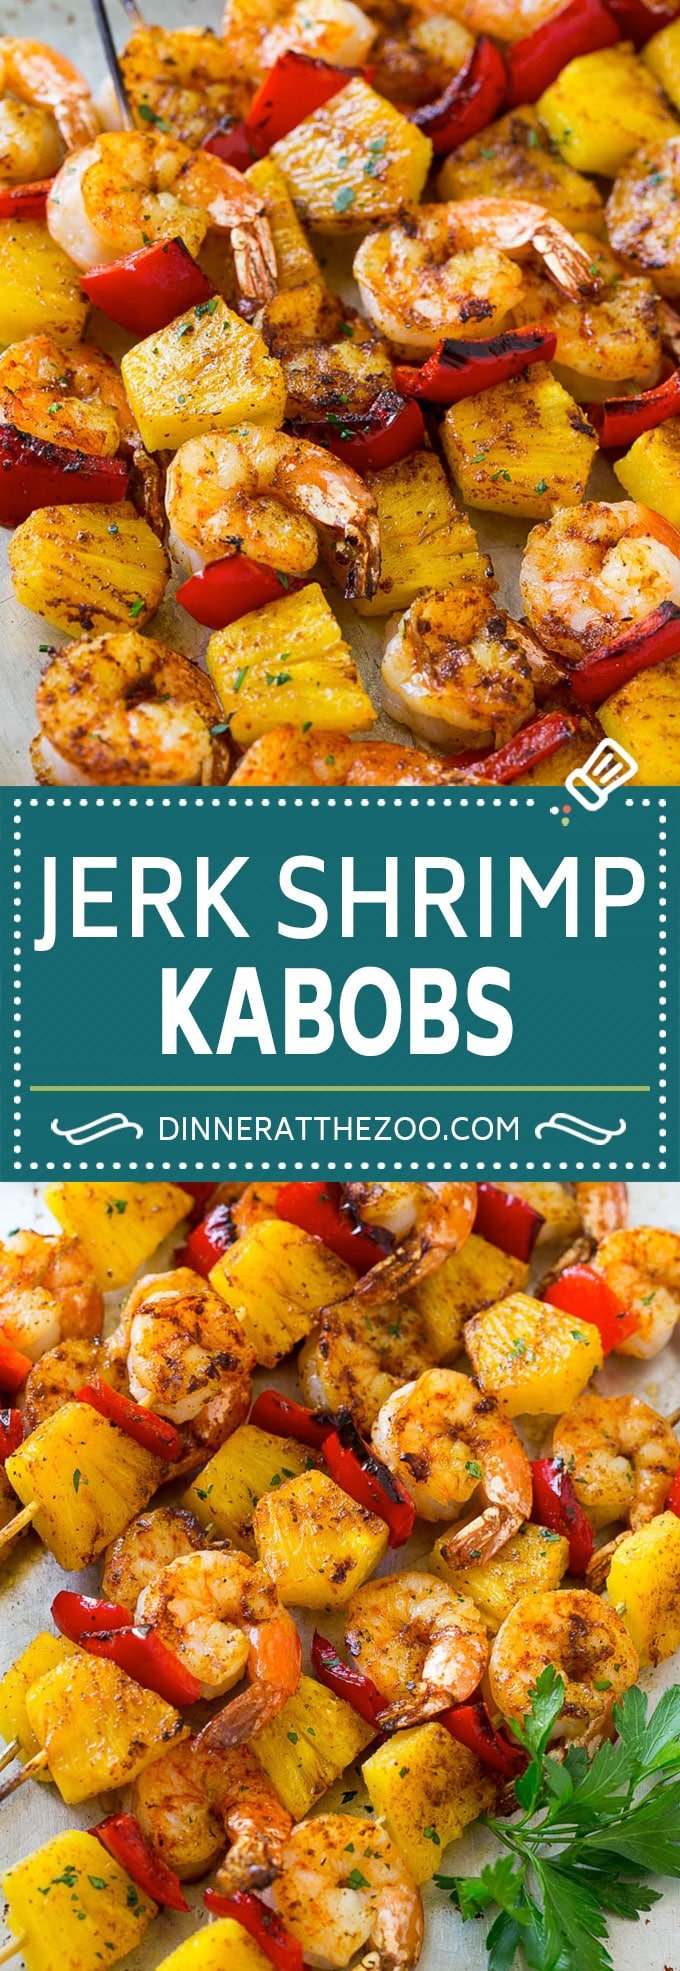 Jerk Shrimp Kabobs | Caribbean Shrimp | Jamaican Shrimp | Grilled Shrimp #grilling #pineapple #shrimp #kabobs #dinneratthezoo